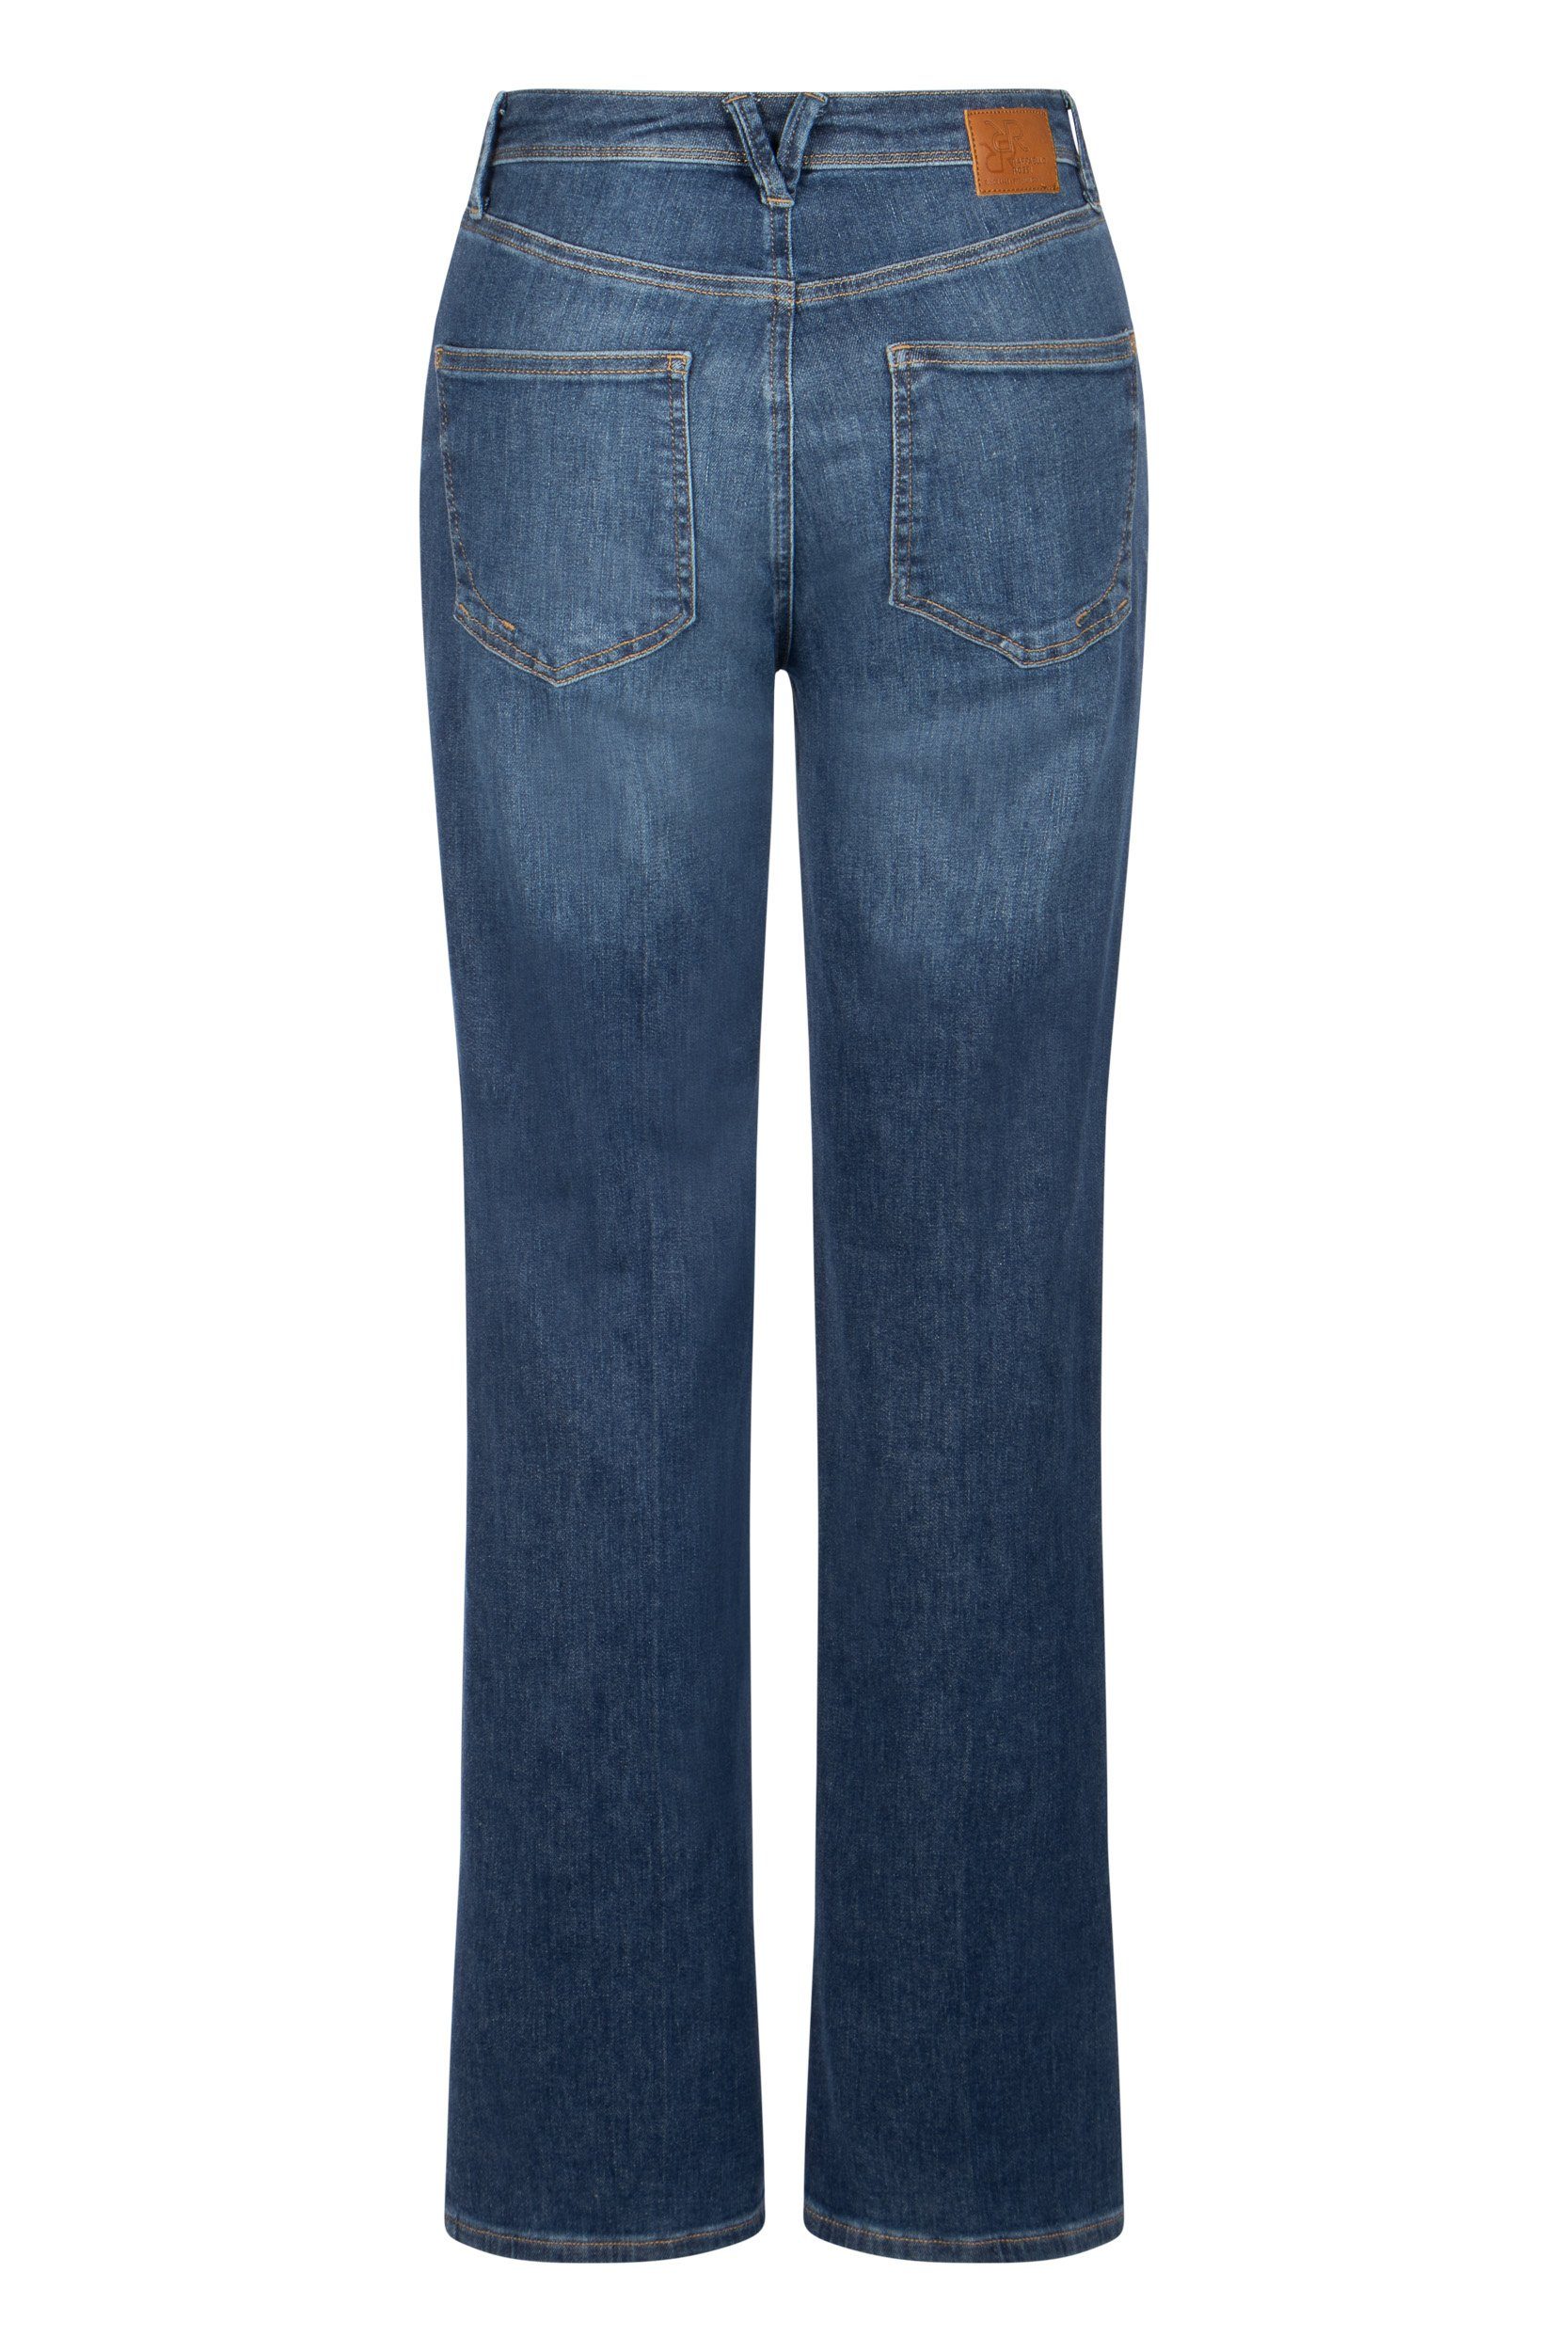 Raffaello Rossi 5-Pocket-Jeans Kira Long B